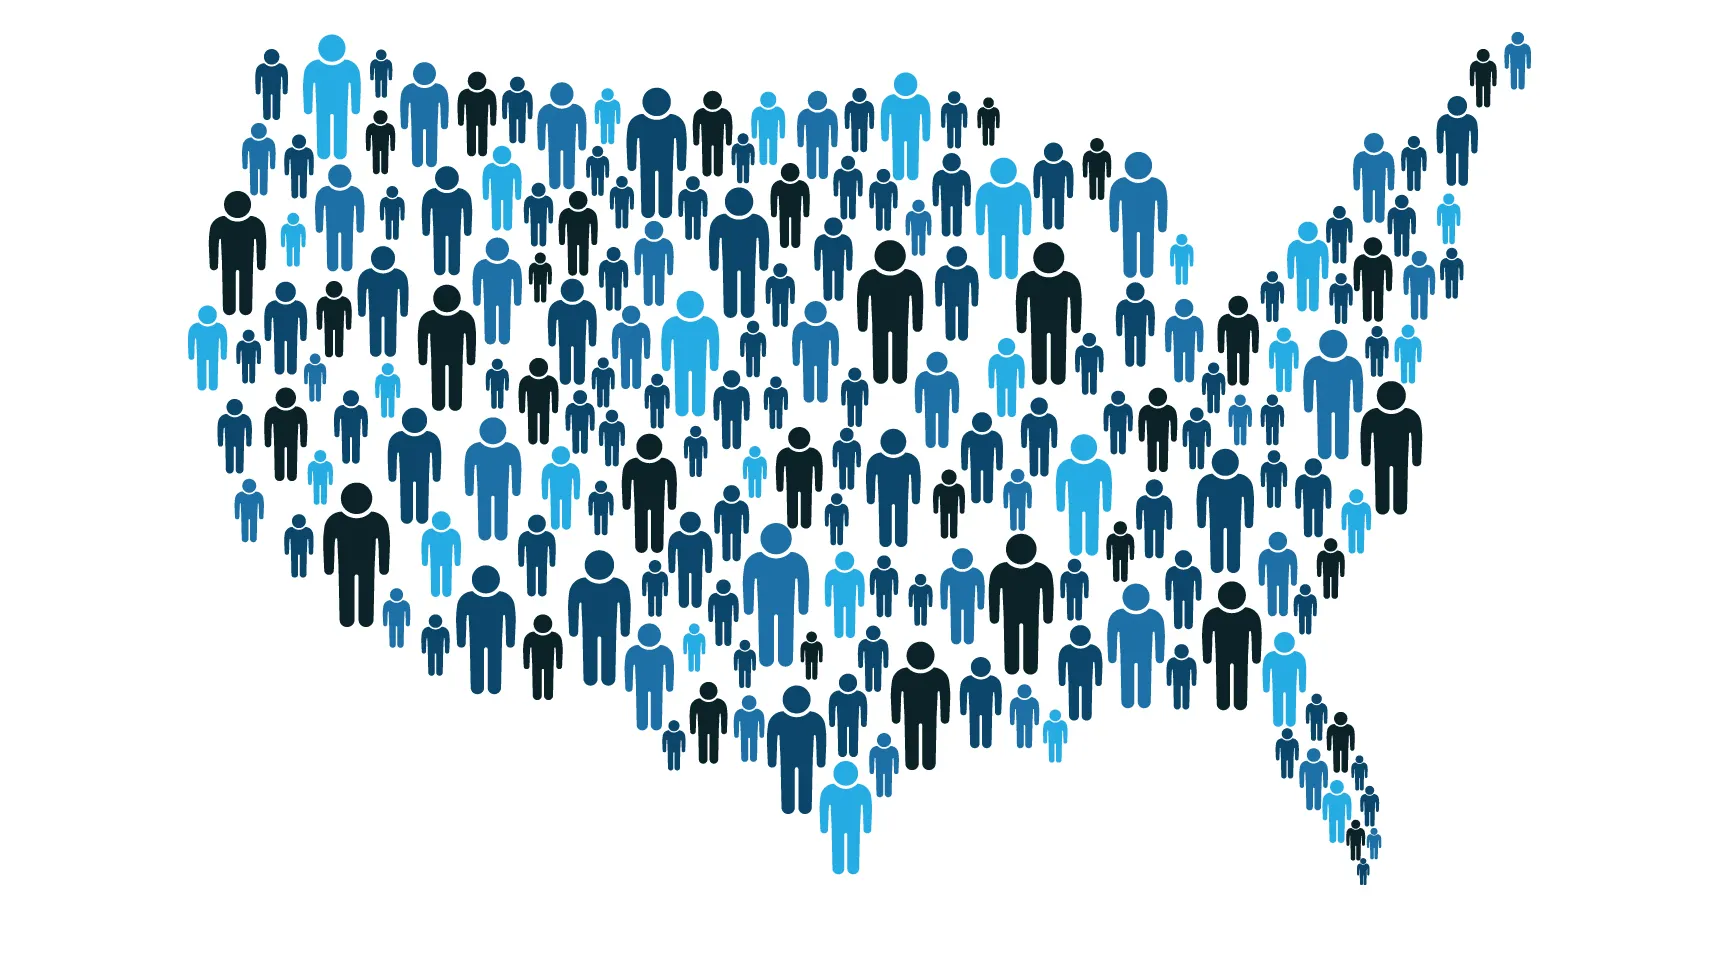 U.S. Census illustration